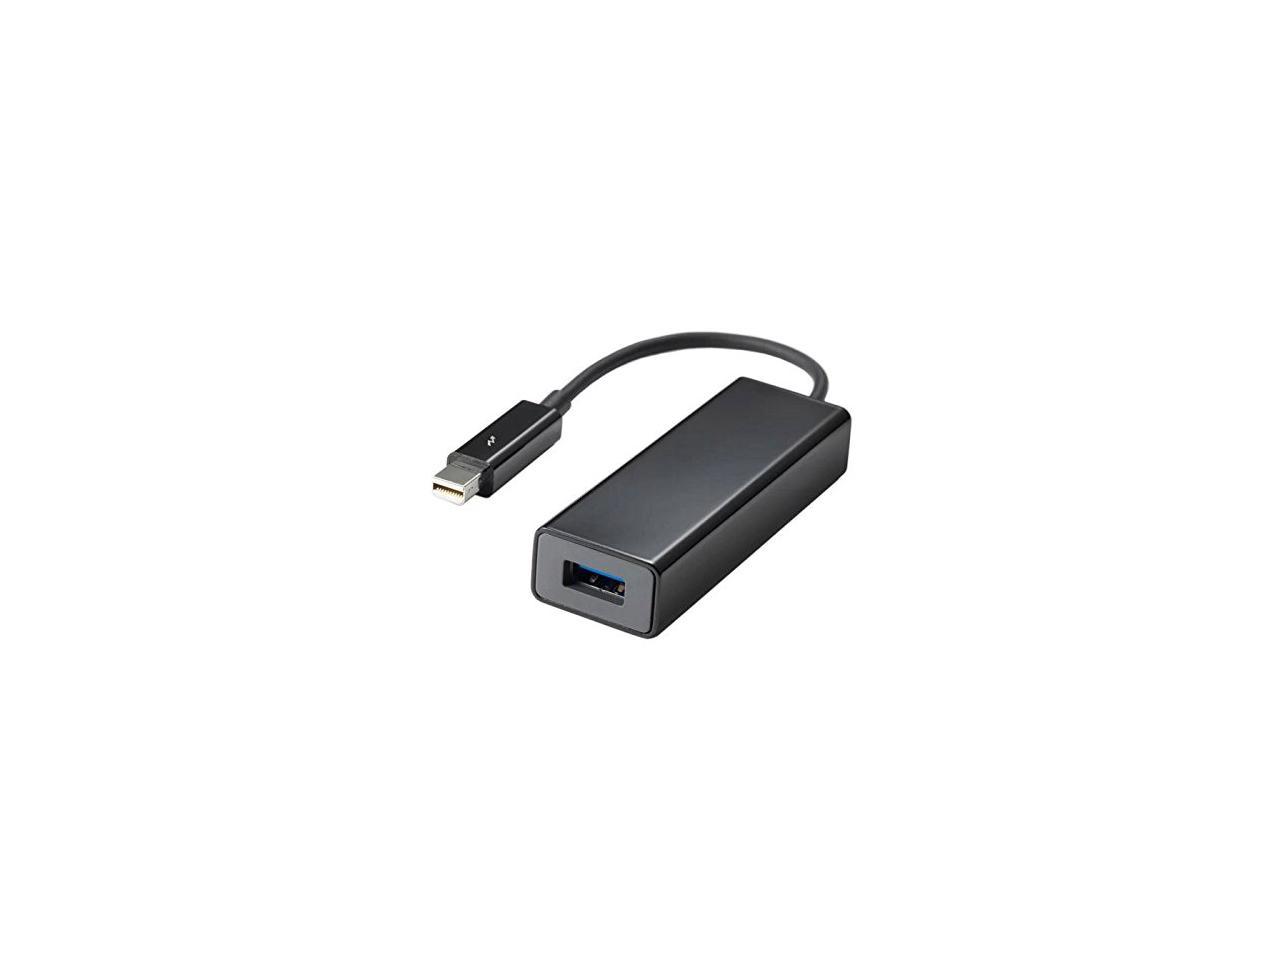 Thunderbolt Port To Usb 3 0 Super Speed Hard Disk Drive Adapter Dongle For Apple Macbook Imac 14 15 Newegg Com